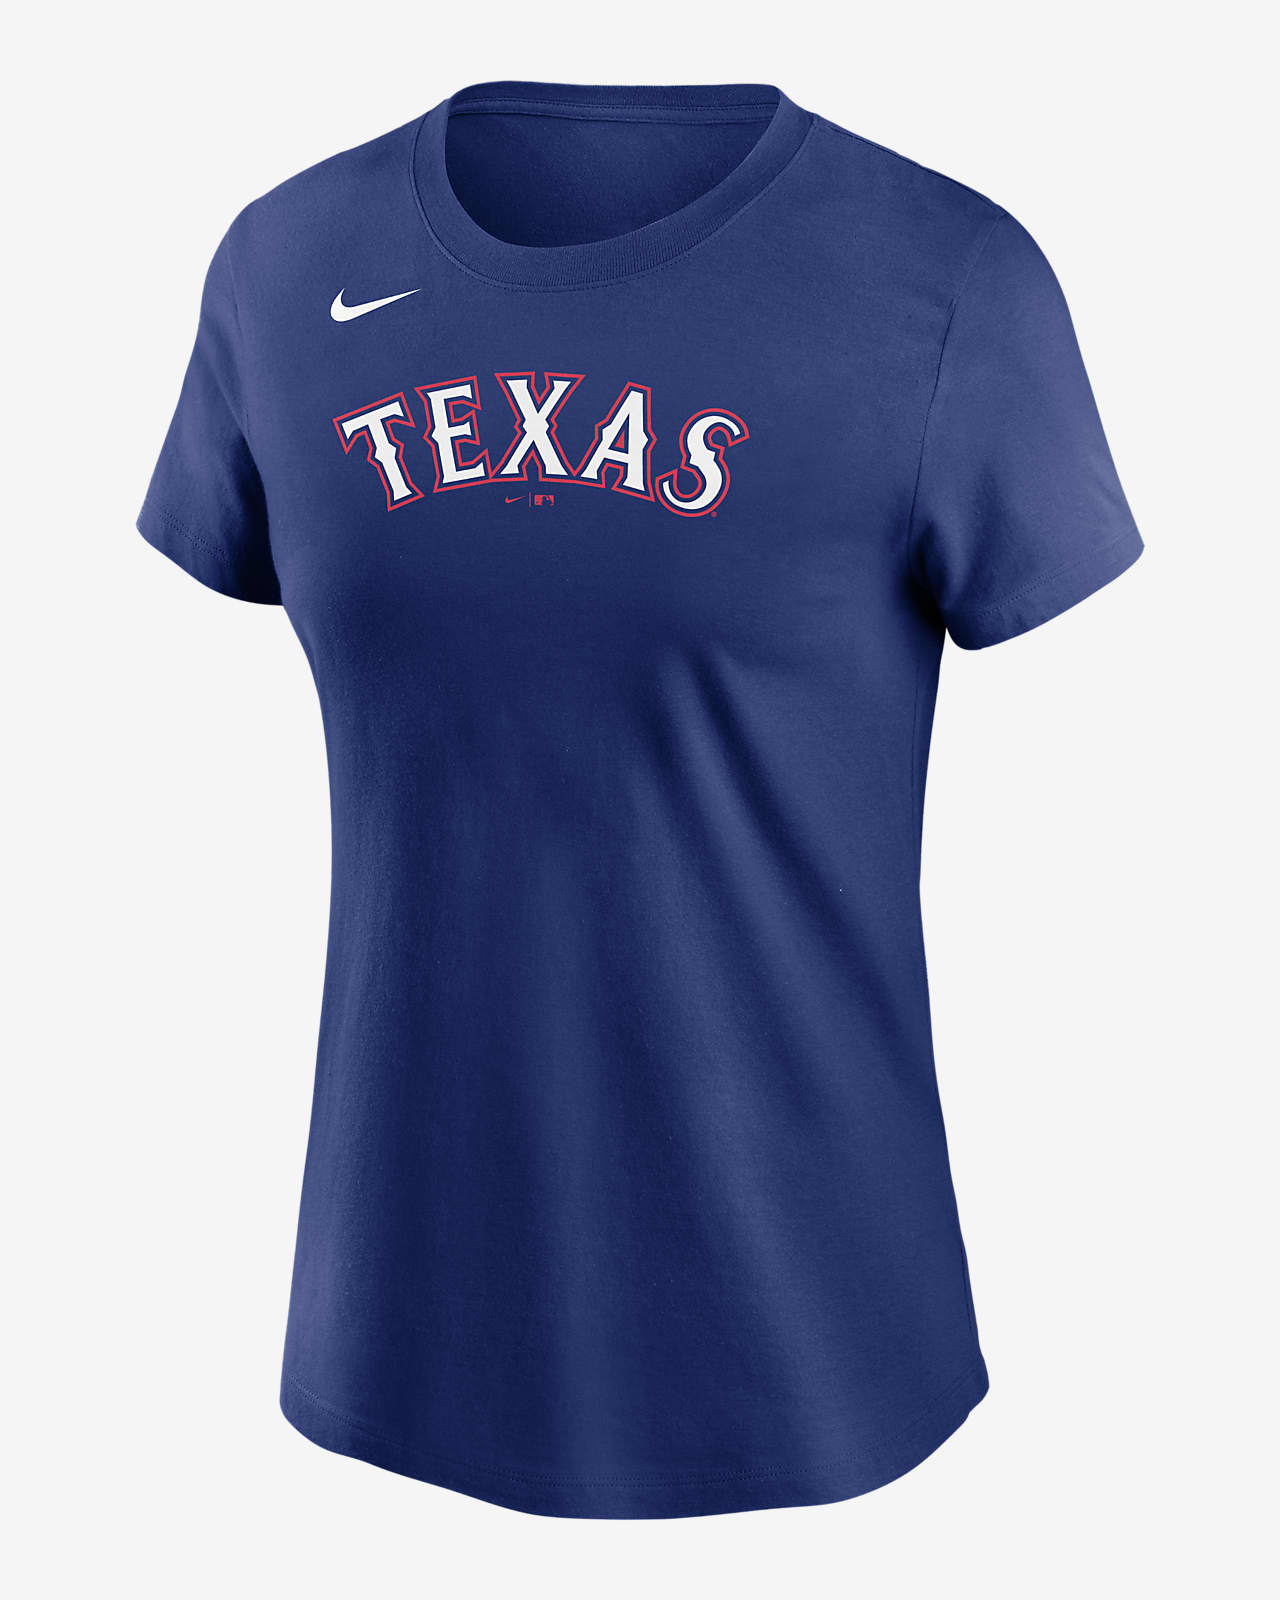 texas rangers womens t shirts